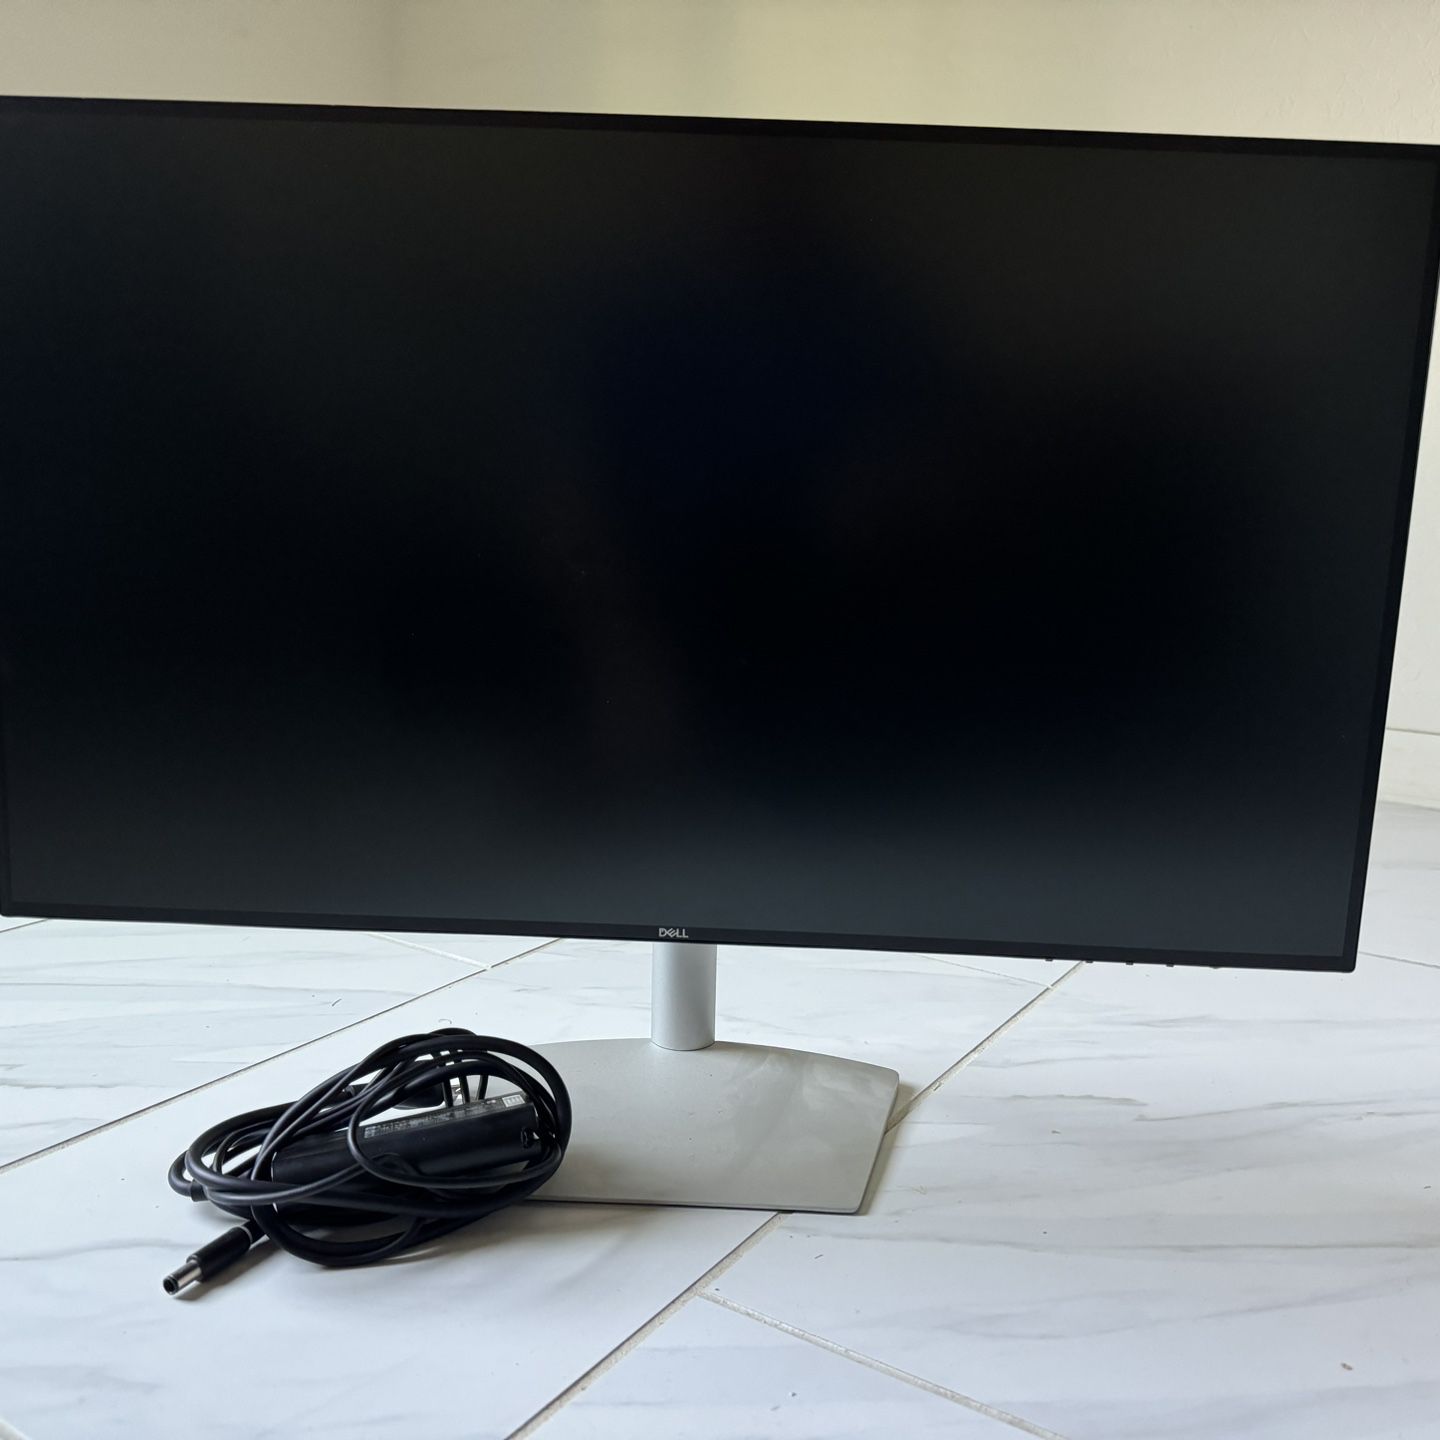 Dell 27” IPS LED Monitor